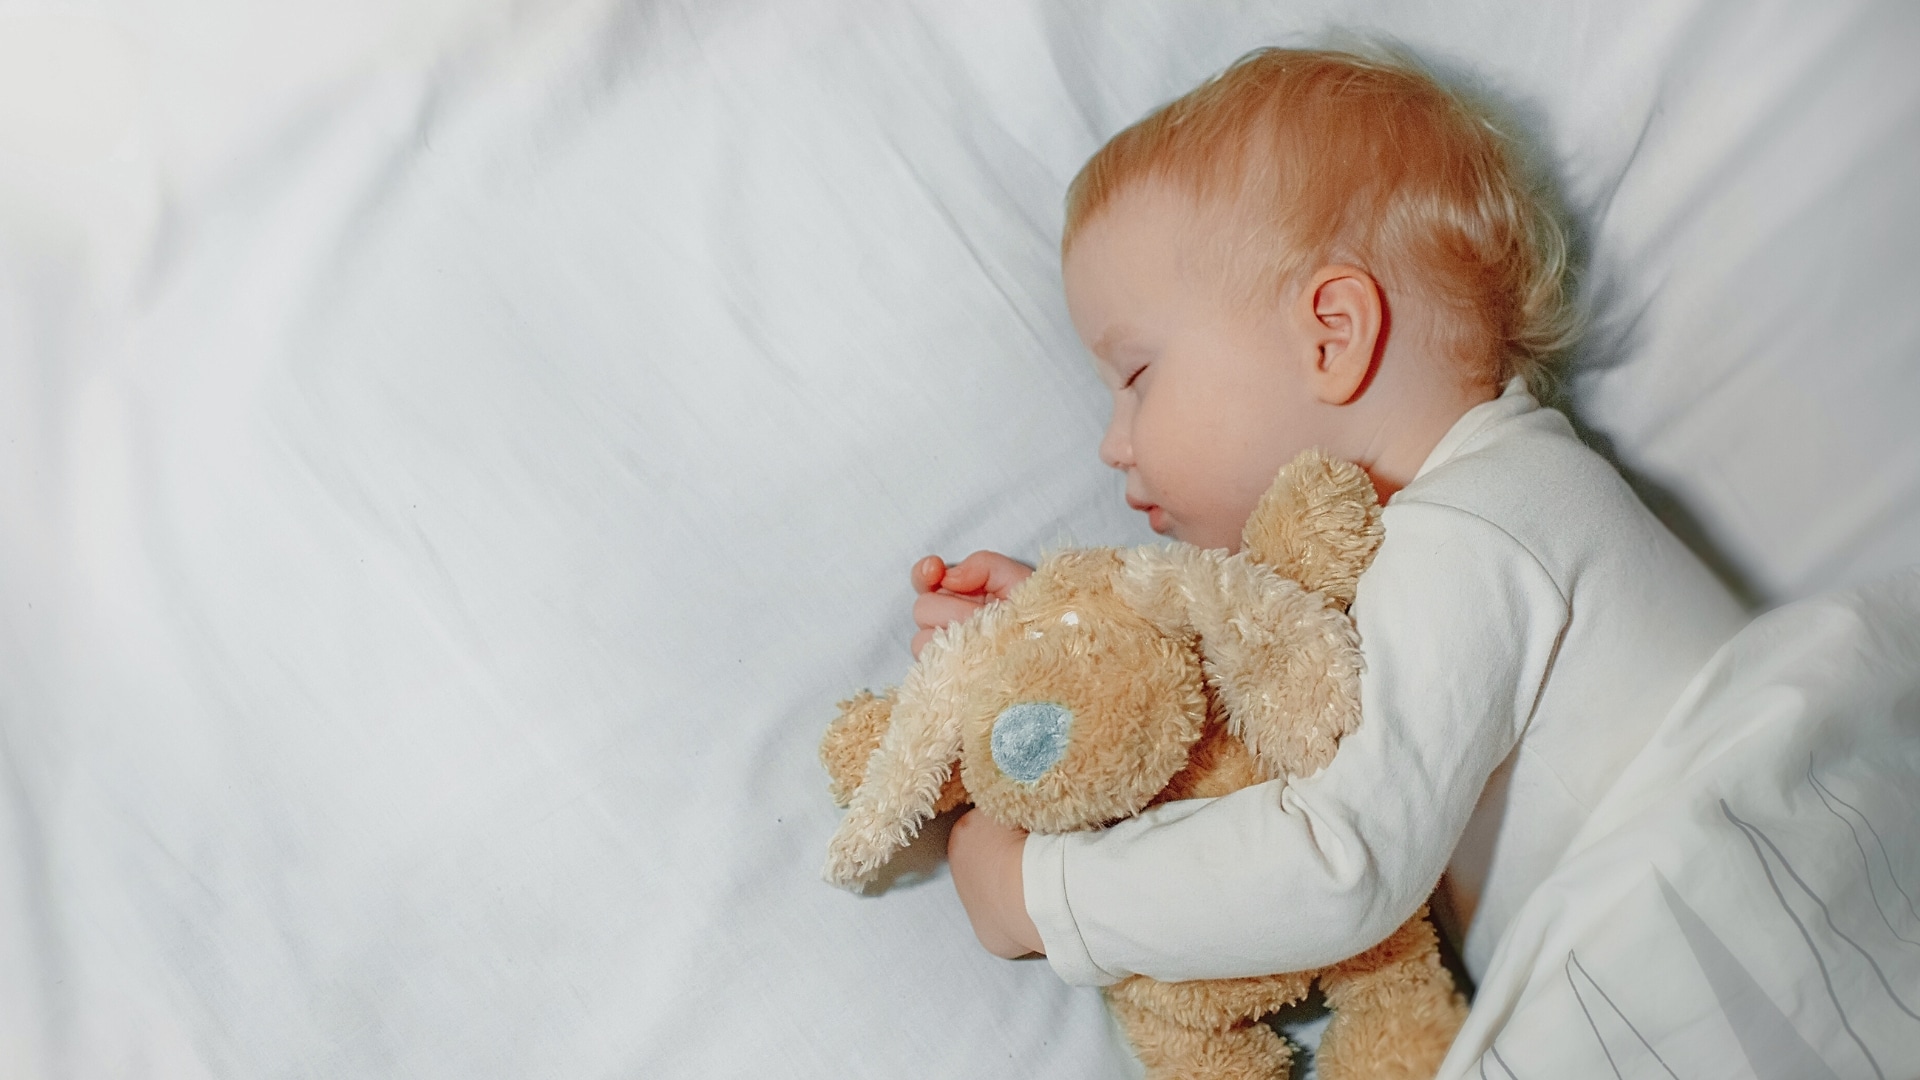 Sleep Training A 1-Year-Old: Tips From The Sleep Expert